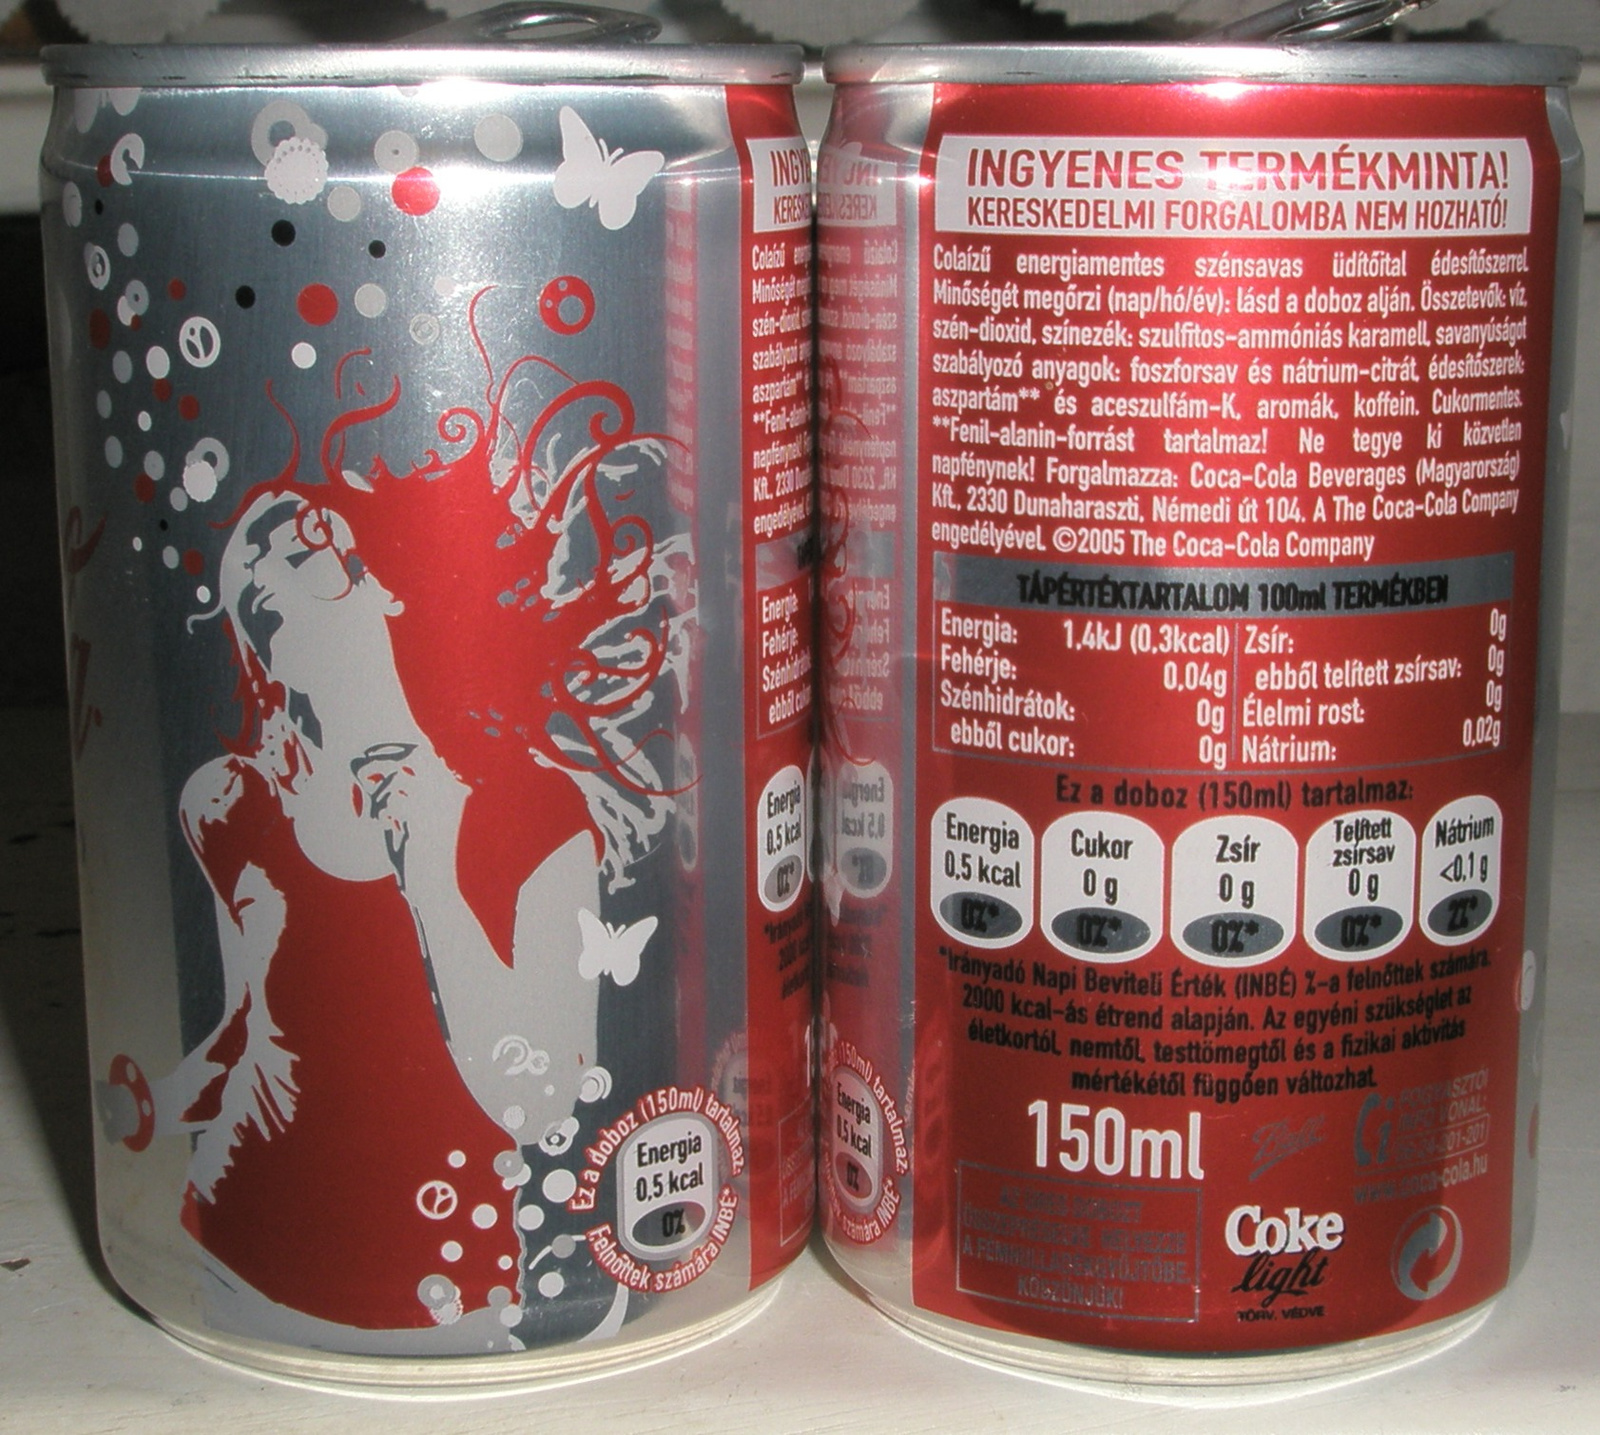 Coca-Cola-icandance-2008 - promo 150ml